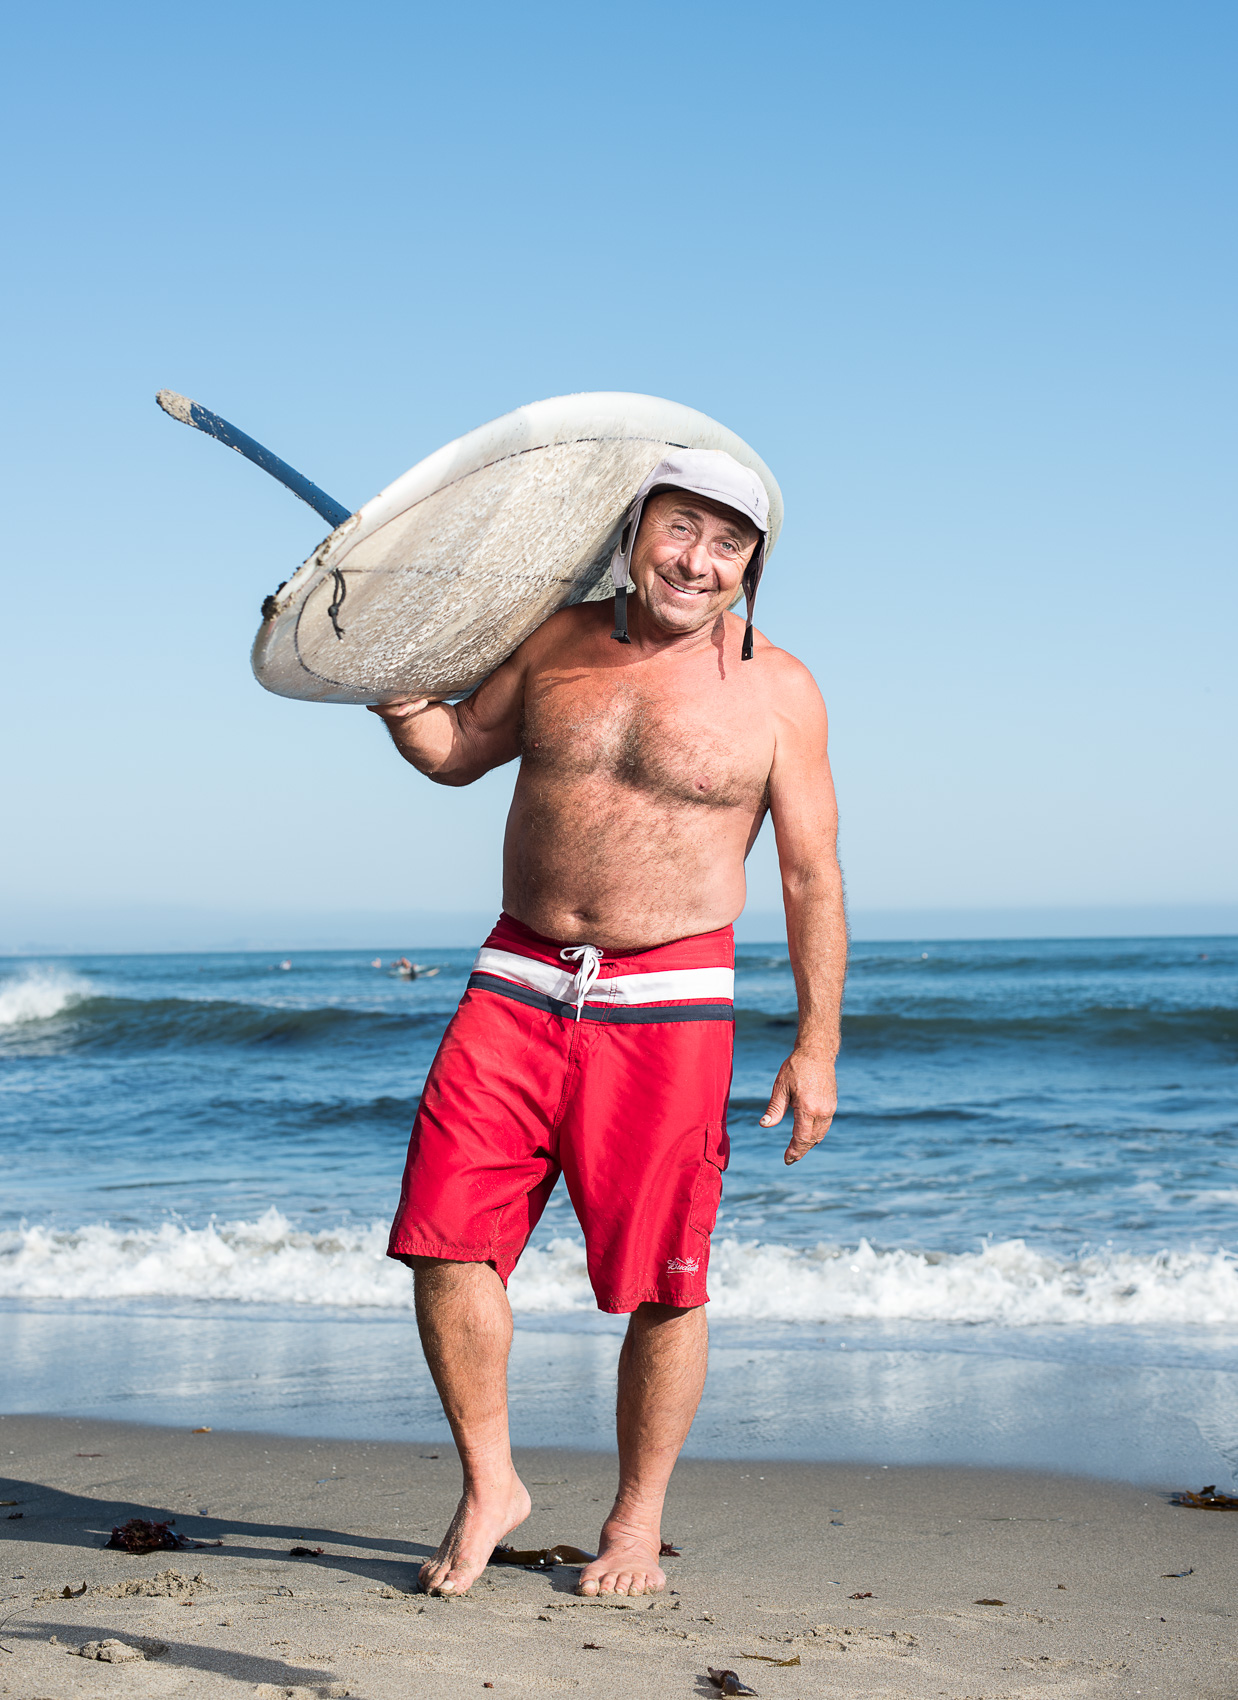 Active senior surfer Boots McGhee portrait on the beach with surfboard  in Surf City USA, Santa Cruz, Calif.